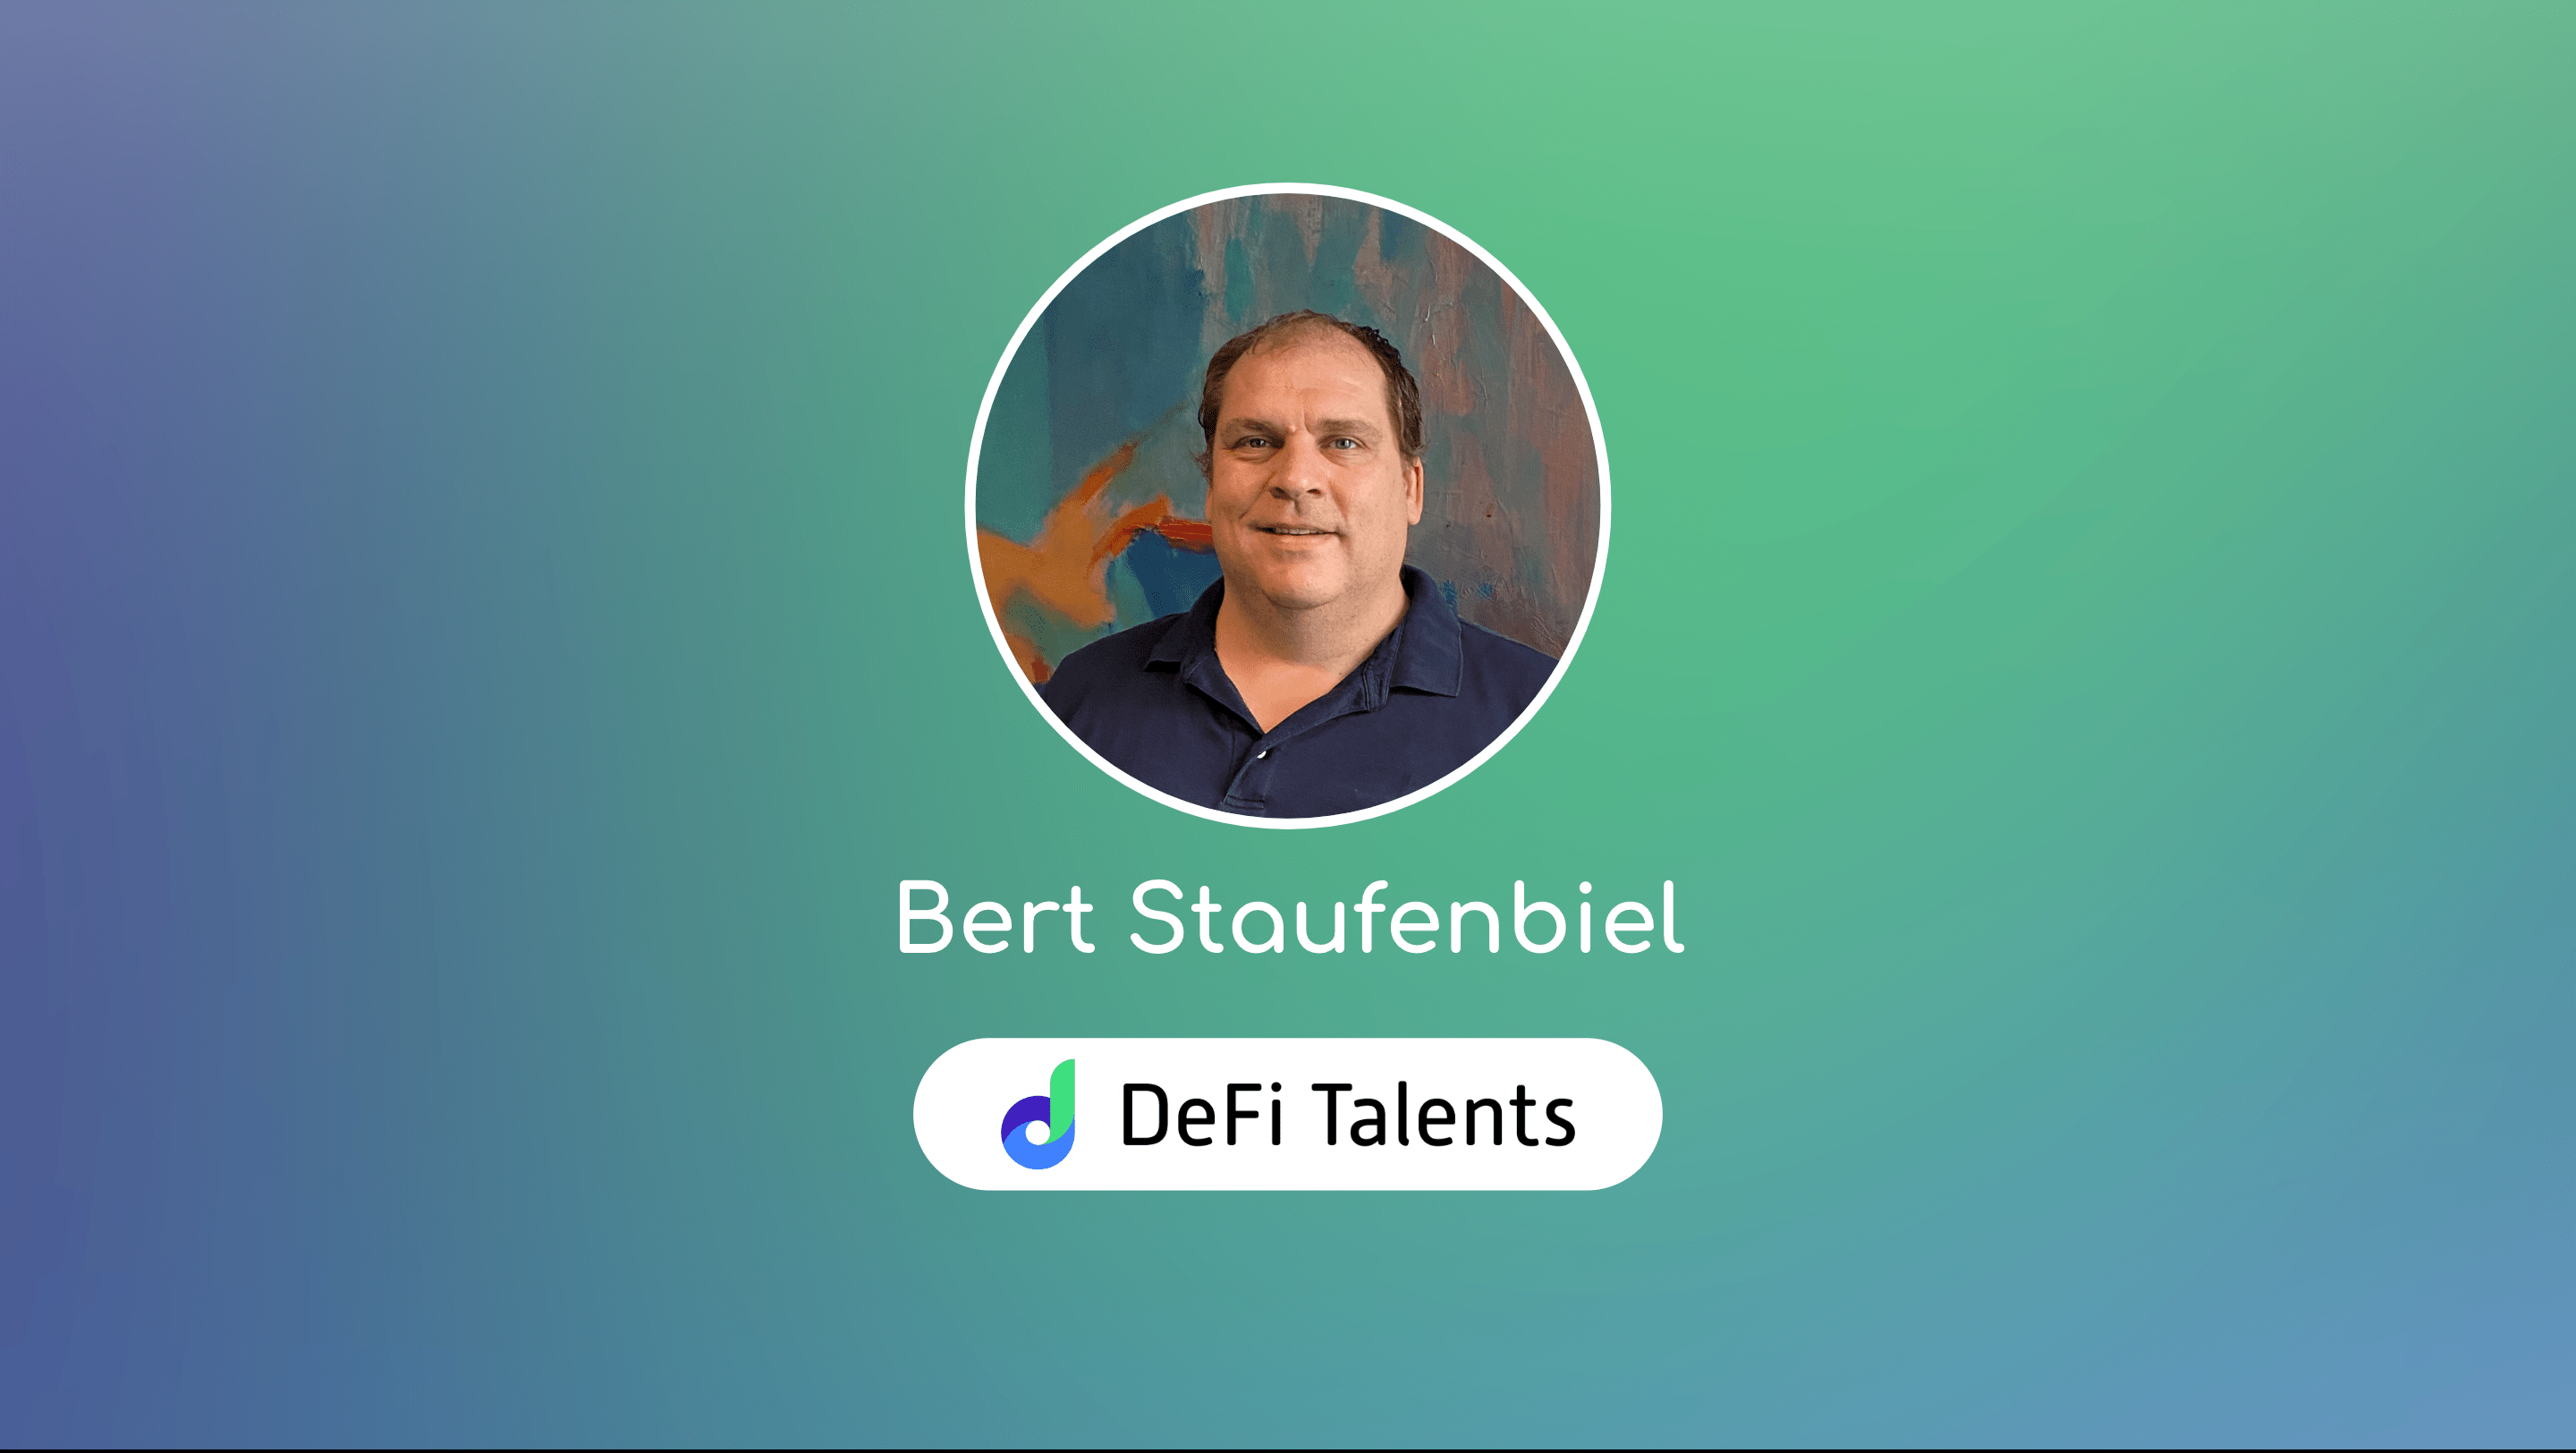 DeFi Talents Mentor – Bert Staufenbiel